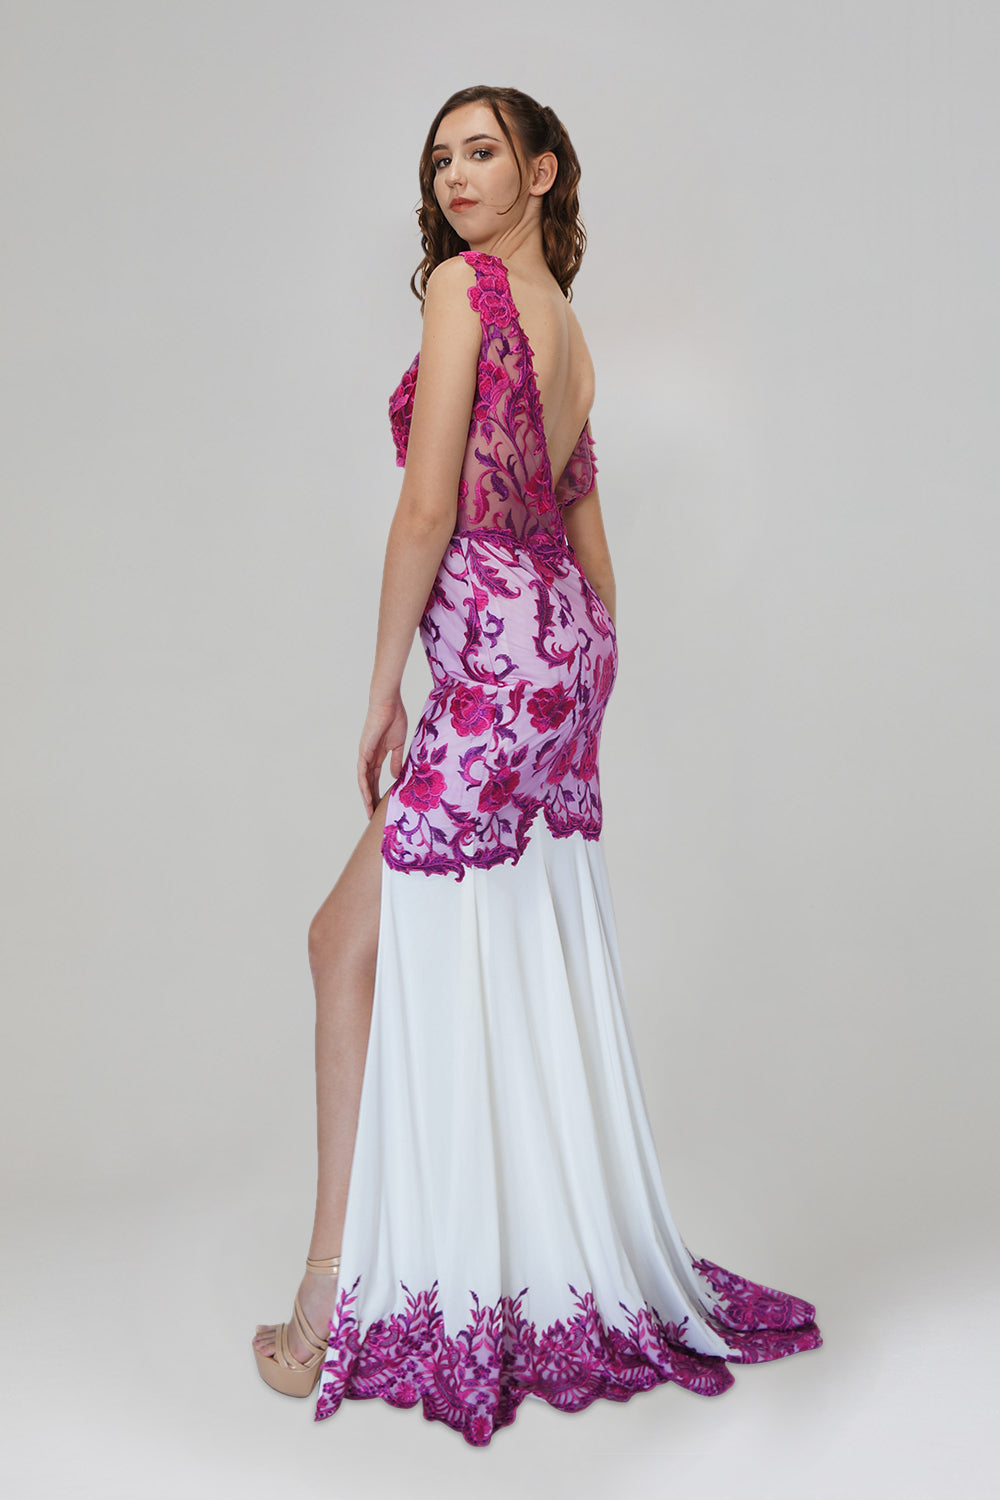 custom hot pink ball dresses perth australia envious bridal & formal